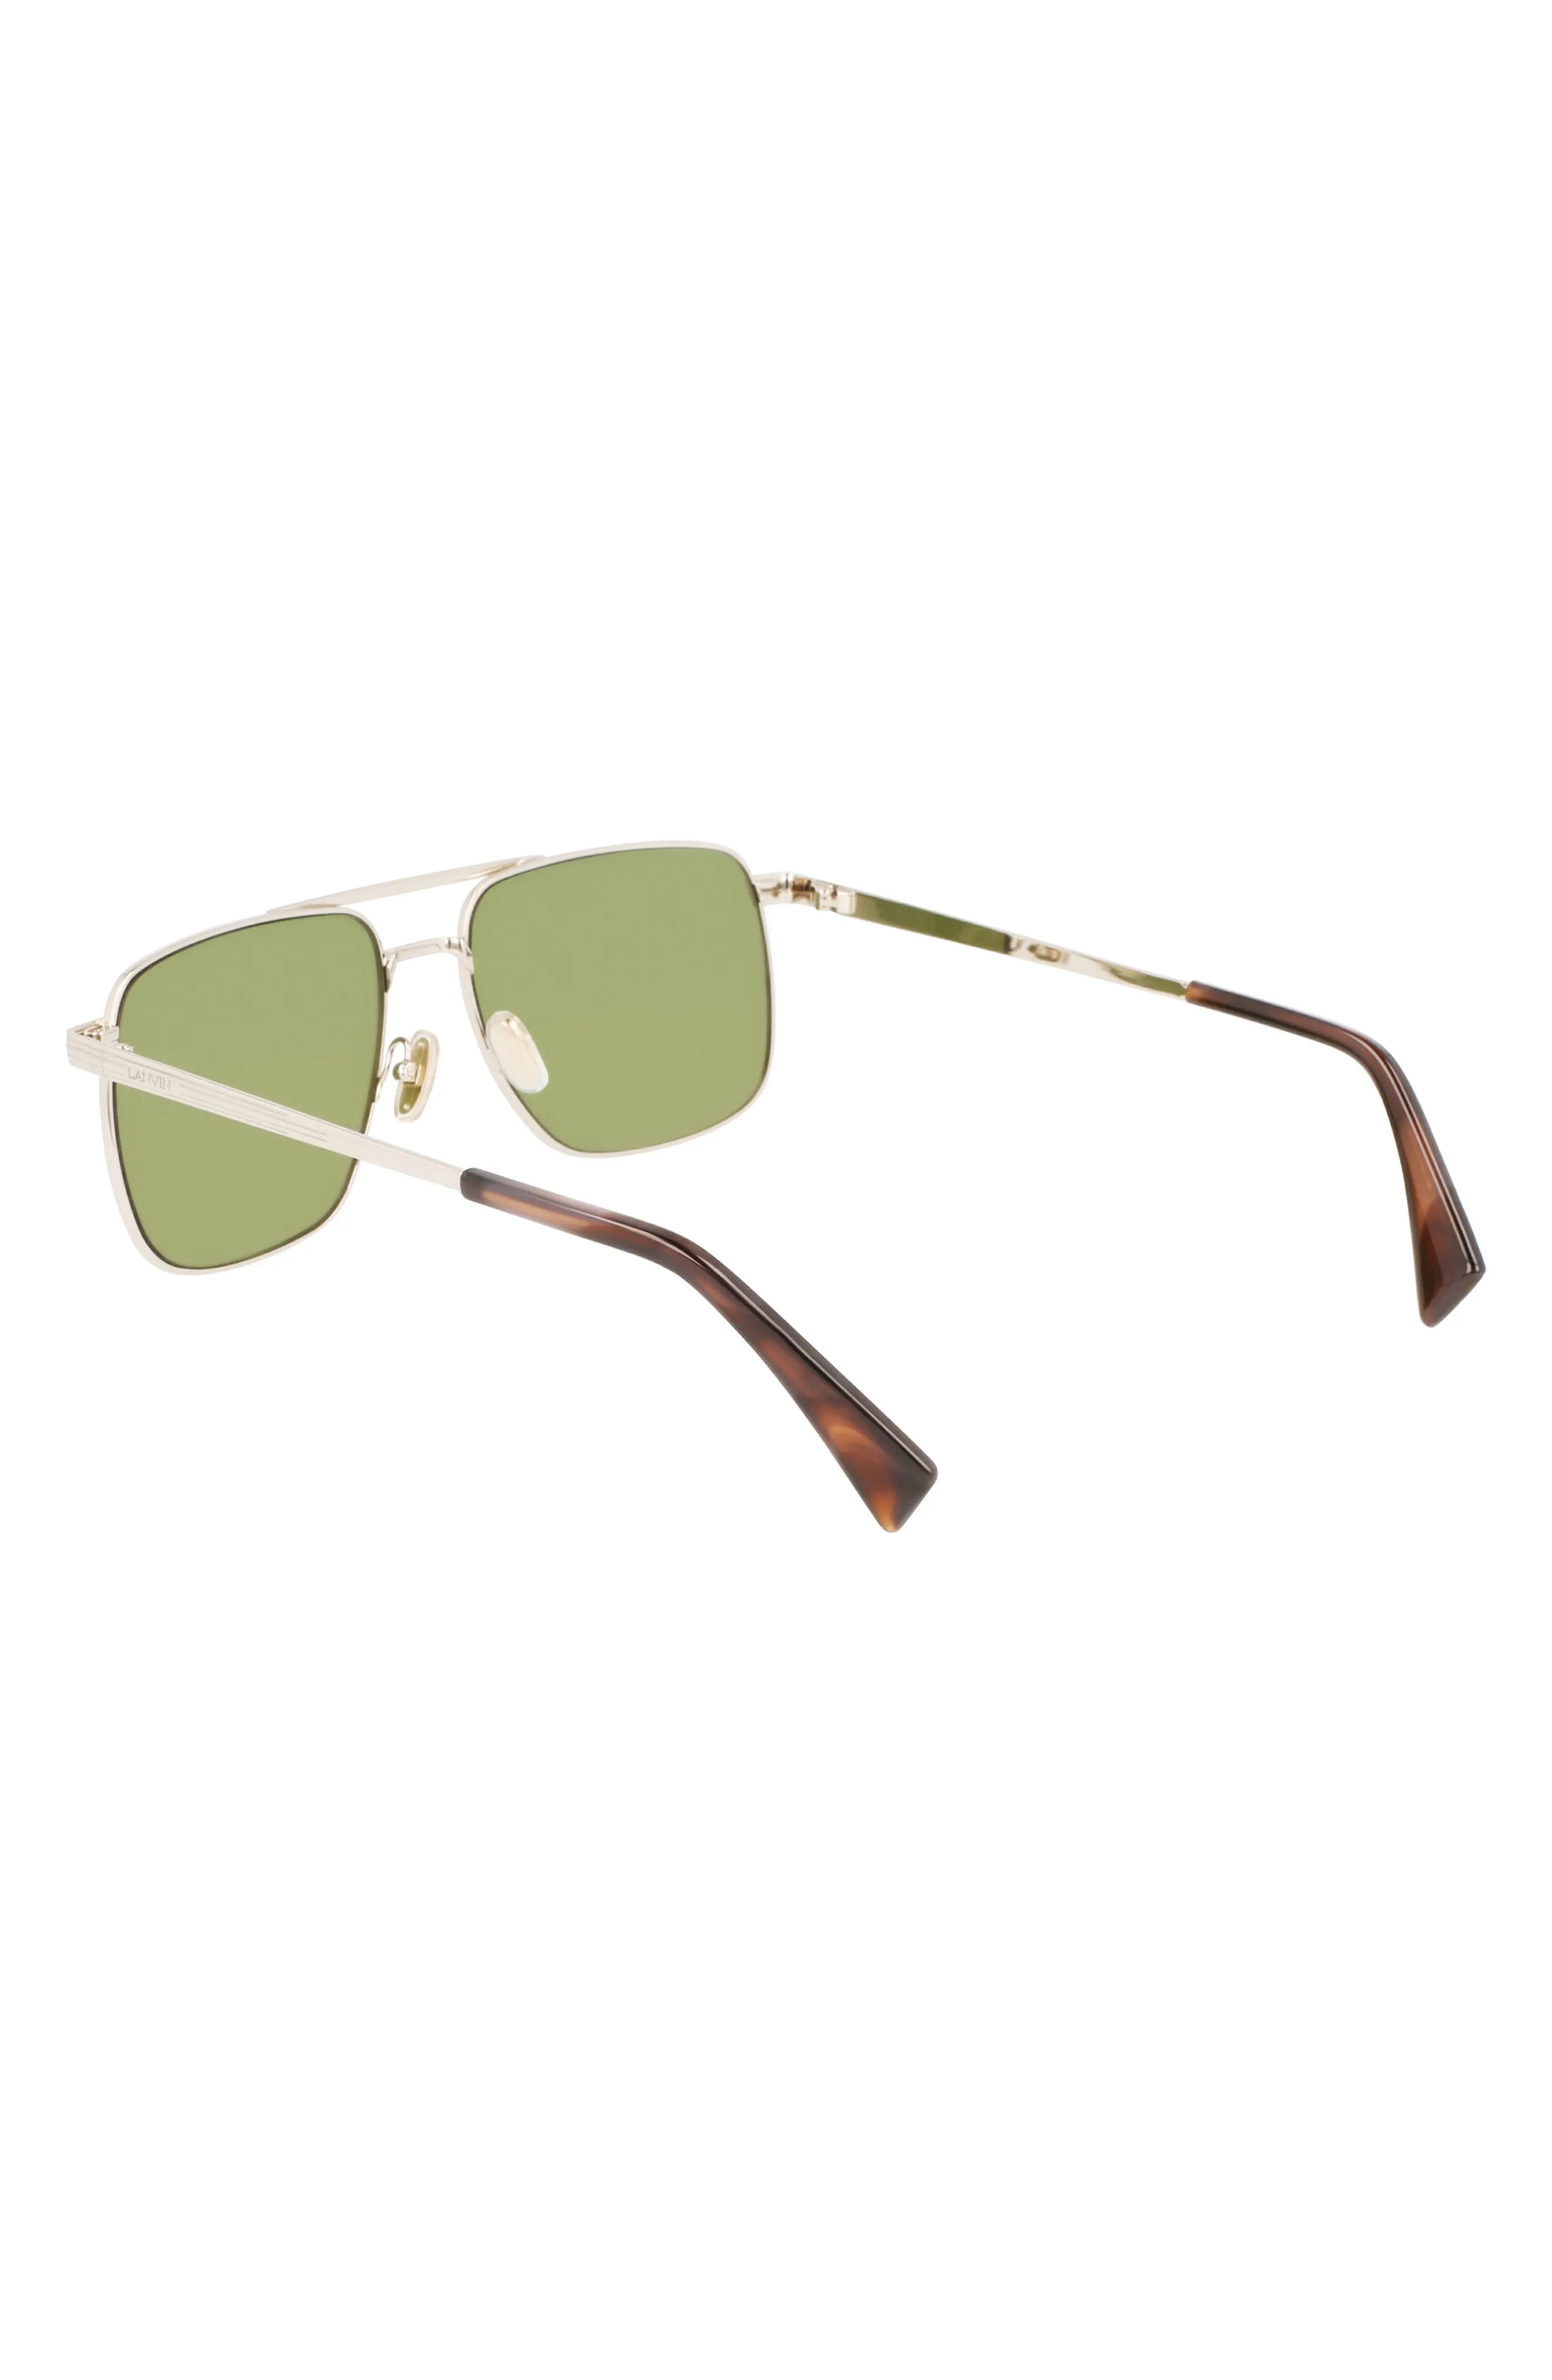 JL 58mm Rectangular Sunglasses in Gold /Green - 5